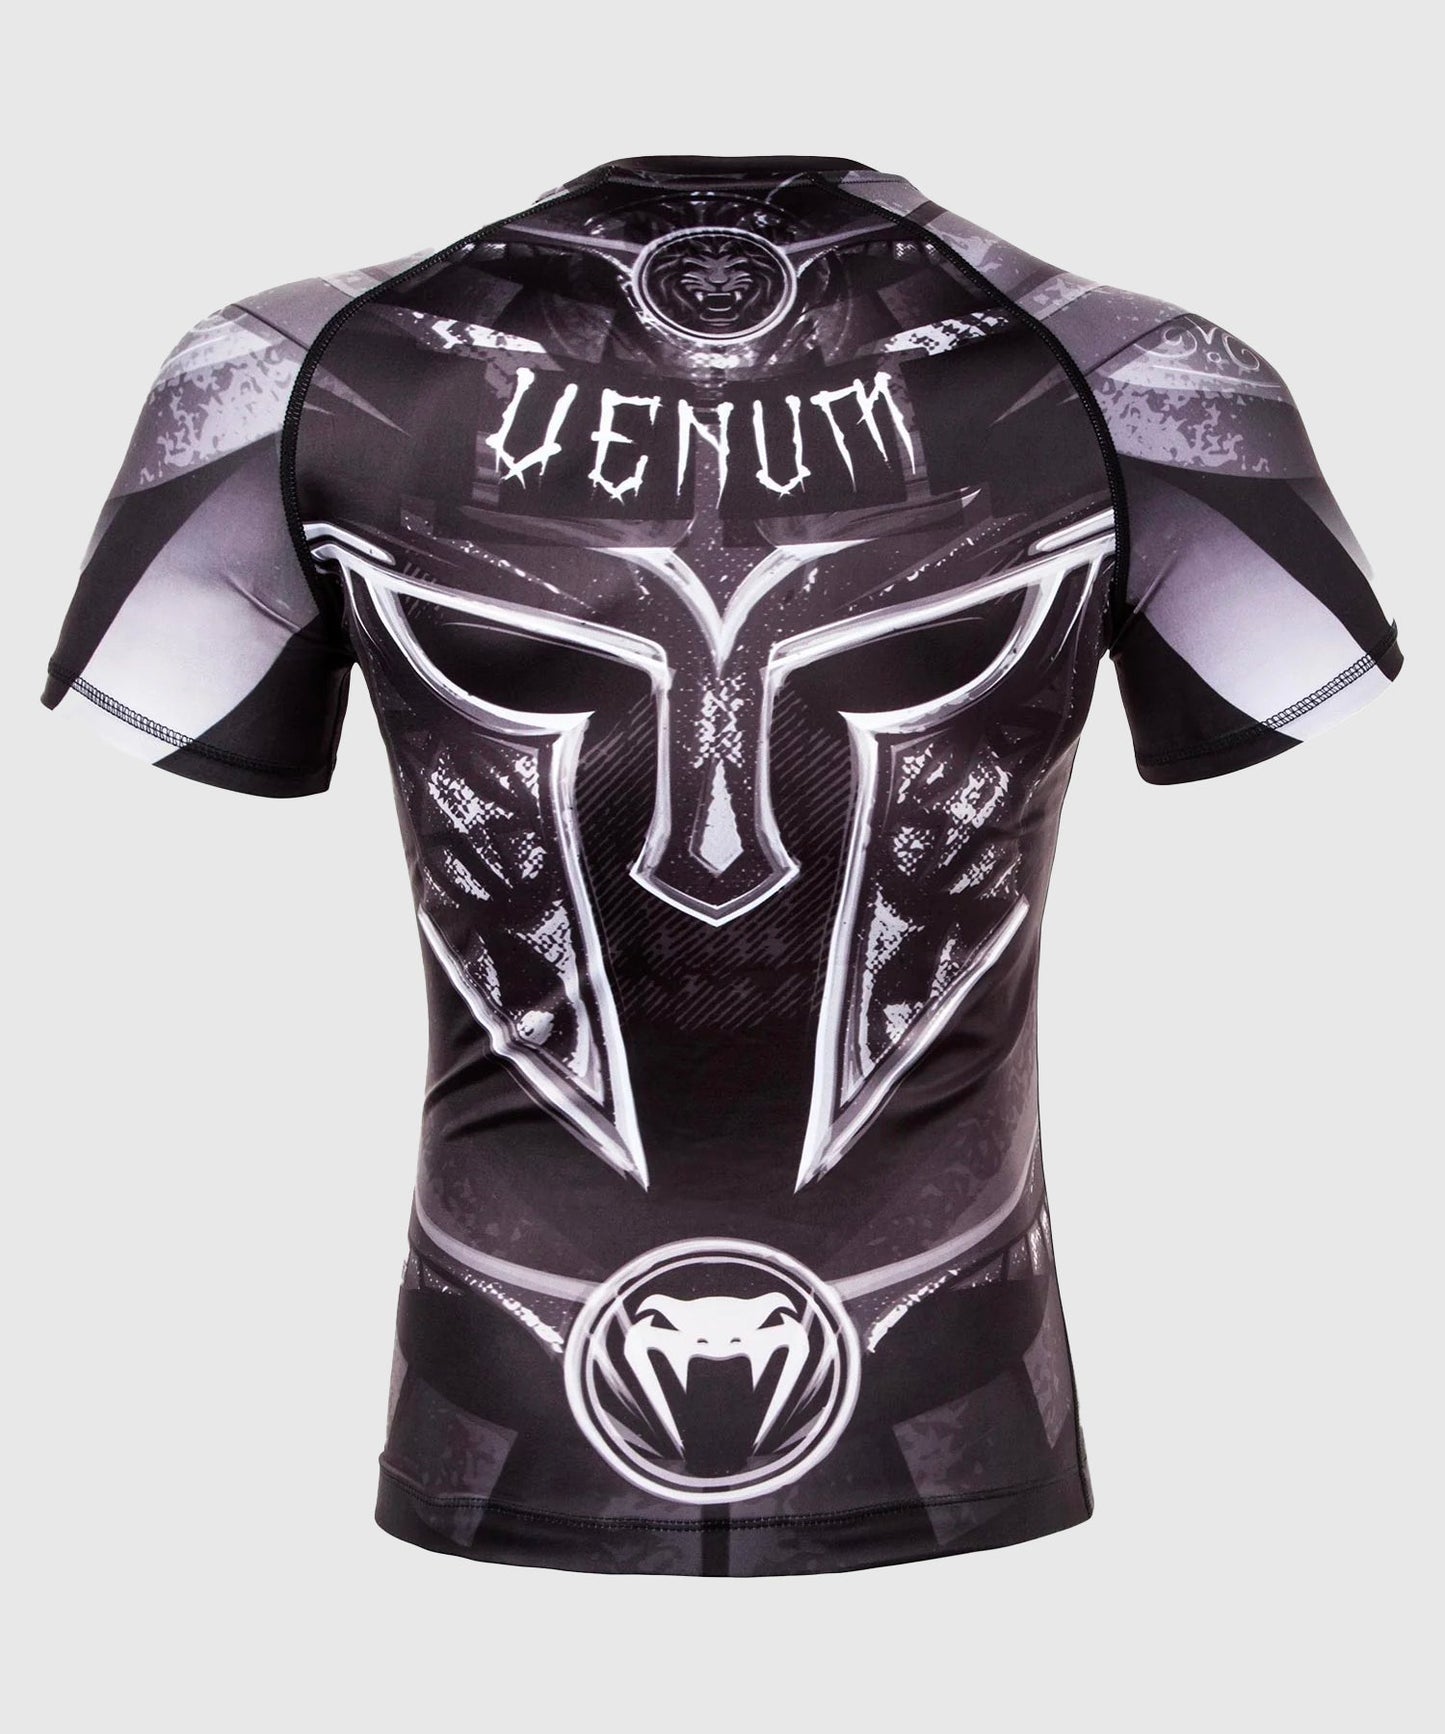 Venum Gladiator 3.0 Rashguard - Black/White - Short Sleeves